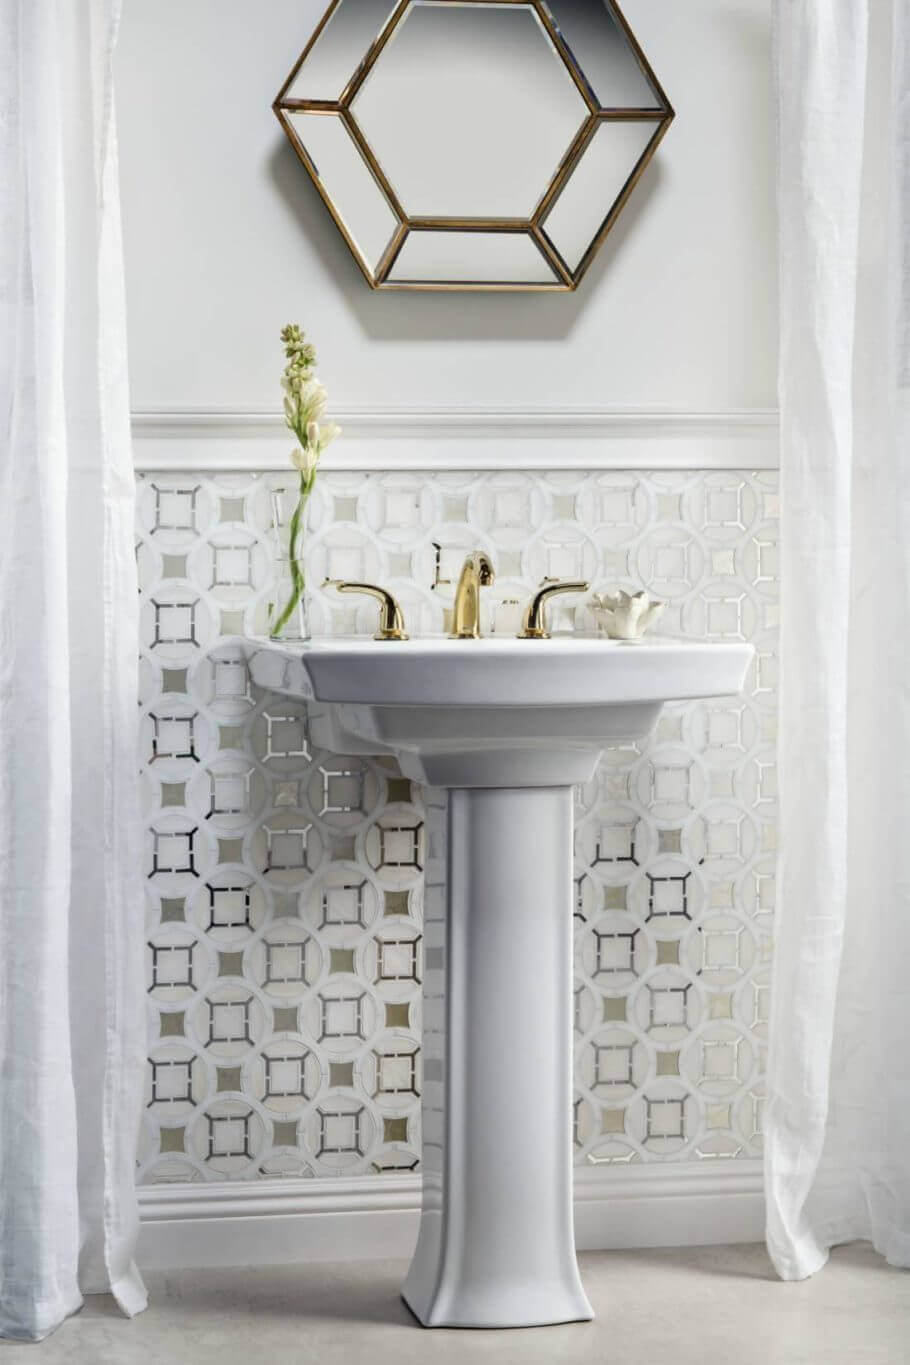 Bathroom backsplash tile with an interlocking circle design and metallic touches